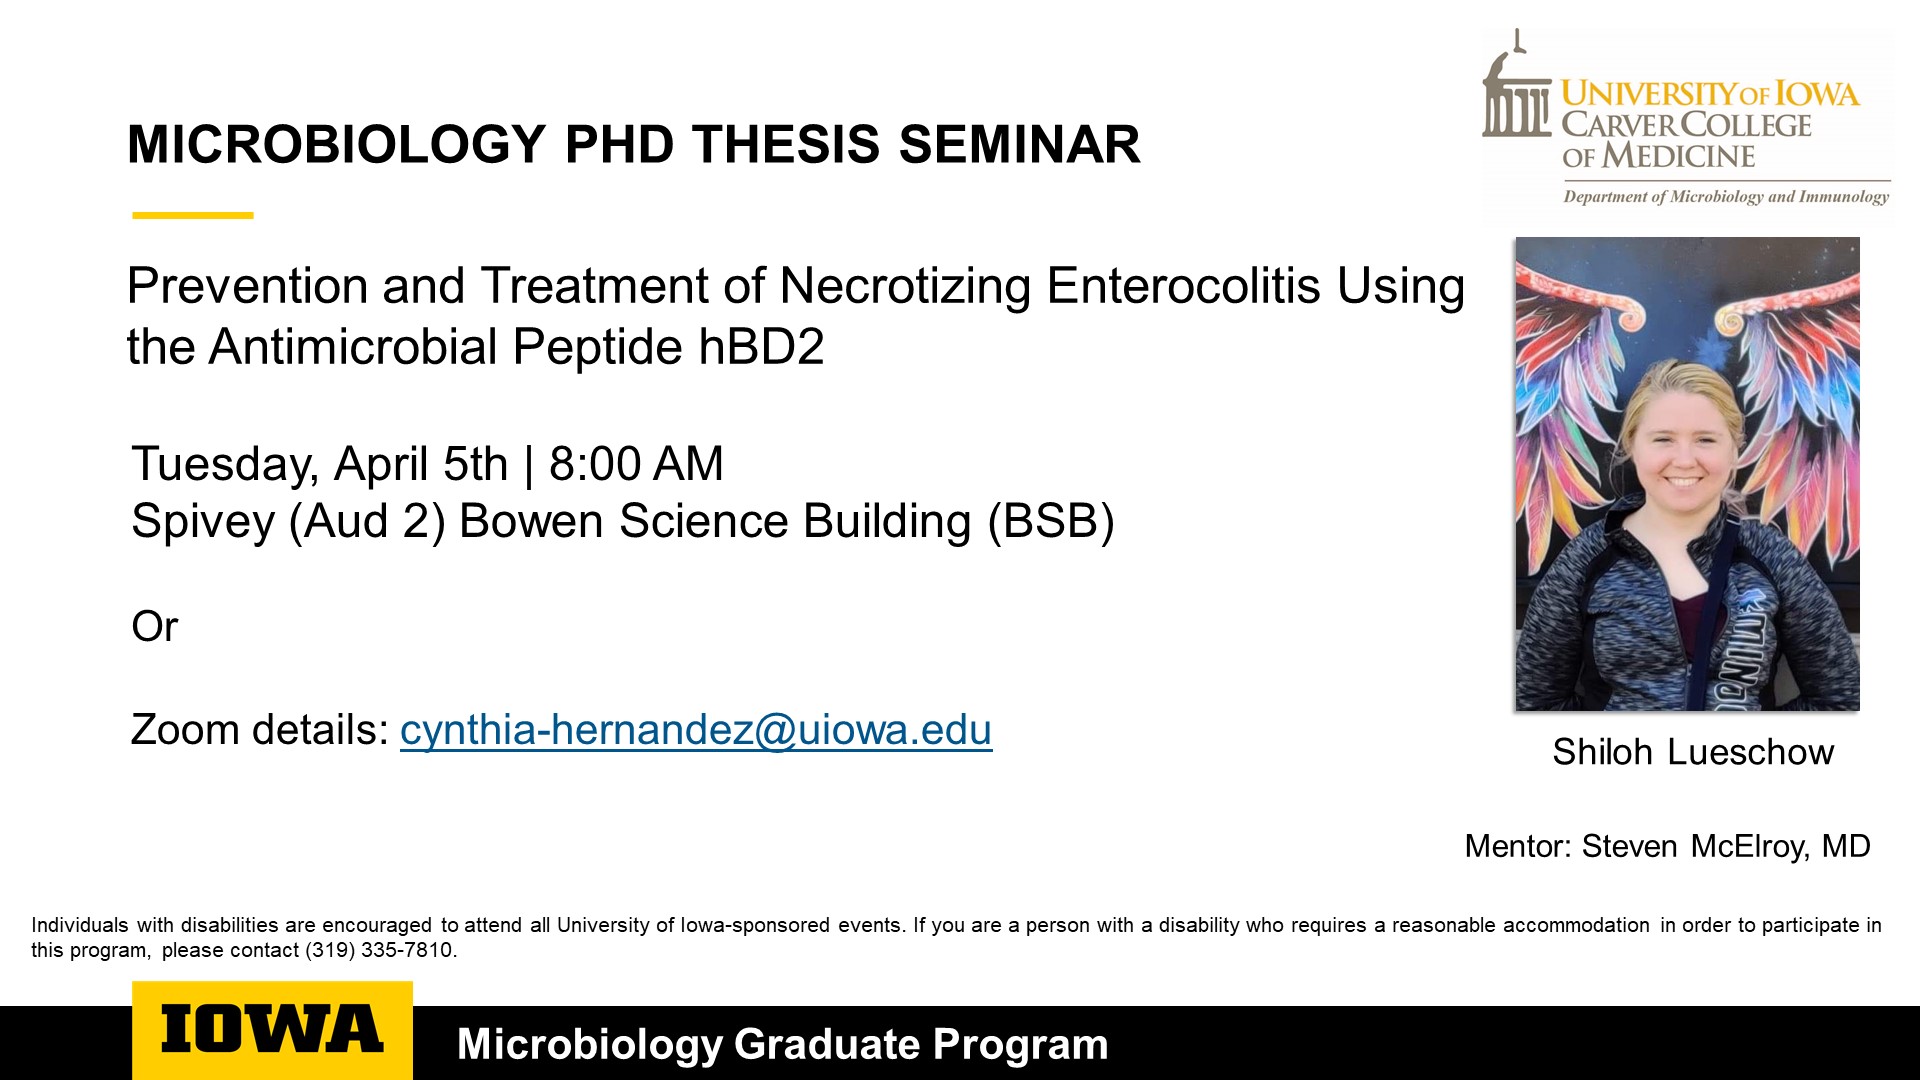 Microbiology Graduate Student PhD Seminar - Shiloh Lueschow promotional image